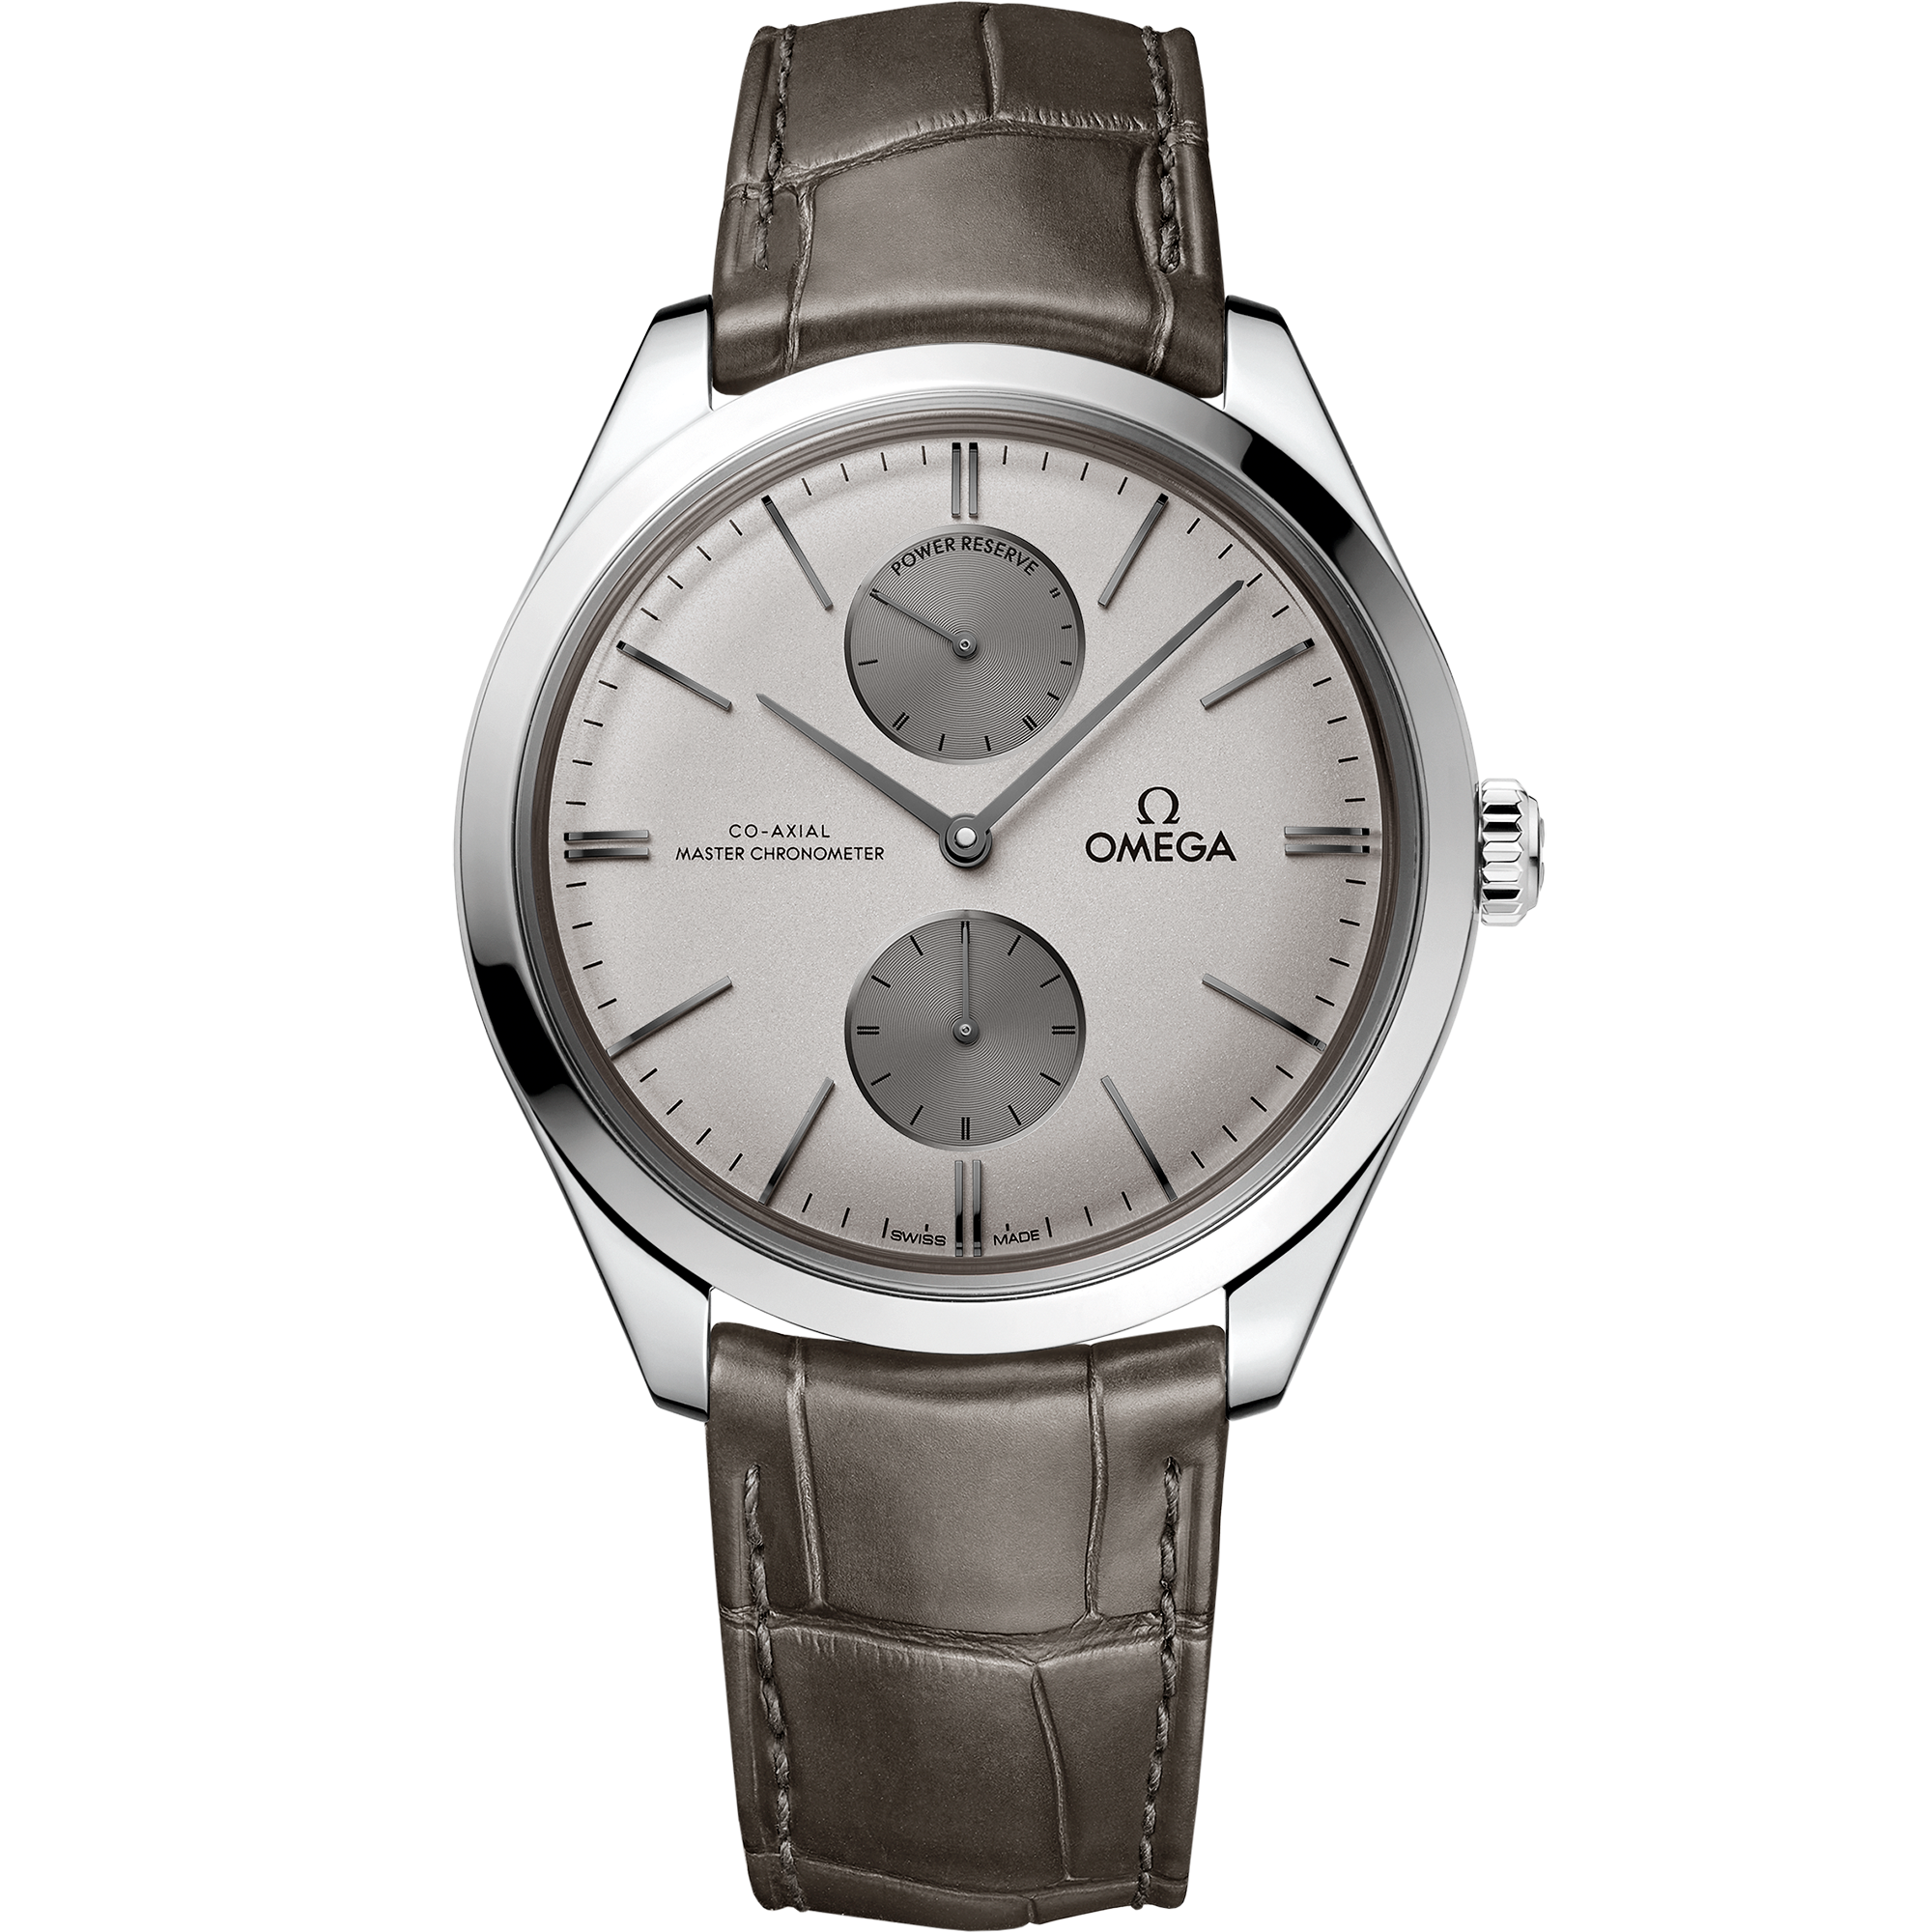 Uhr mit Silber Zifferblatt auf Stahl Gehäuse mit Lederarmband bracelet - De Ville Trésor 40 mm, Stahl mit Lederarmband - 435.13.40.22.06.001